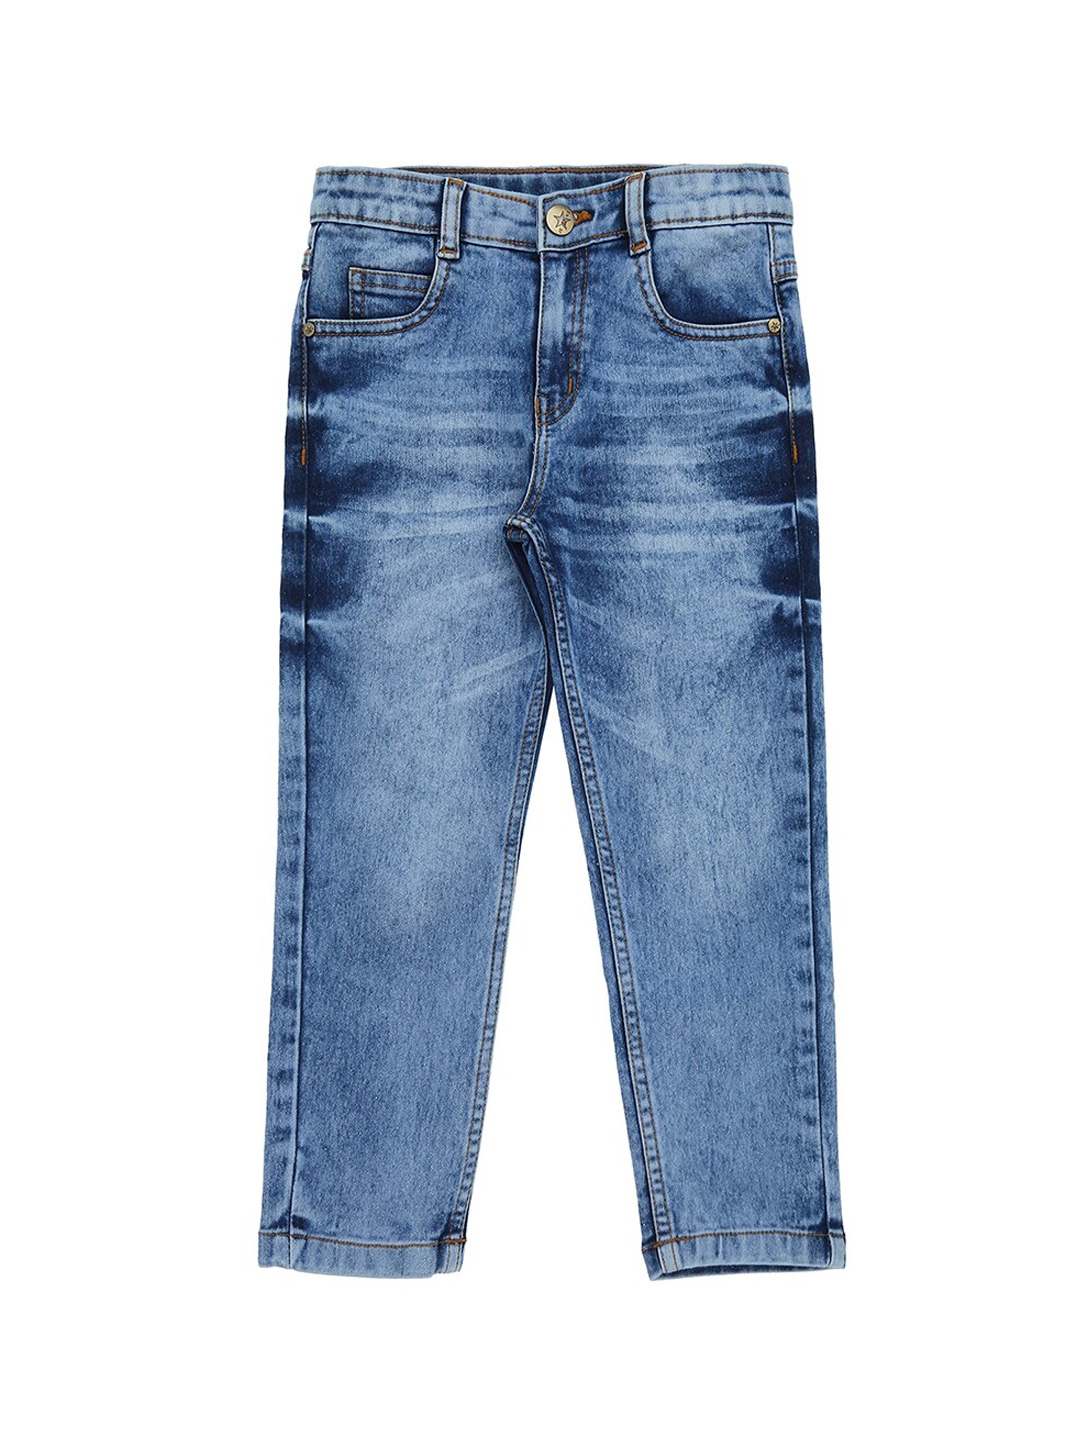 Buy High Star Boys Blue Slim Fit Jeans - Jeans for Boys 13610820 | Myntra